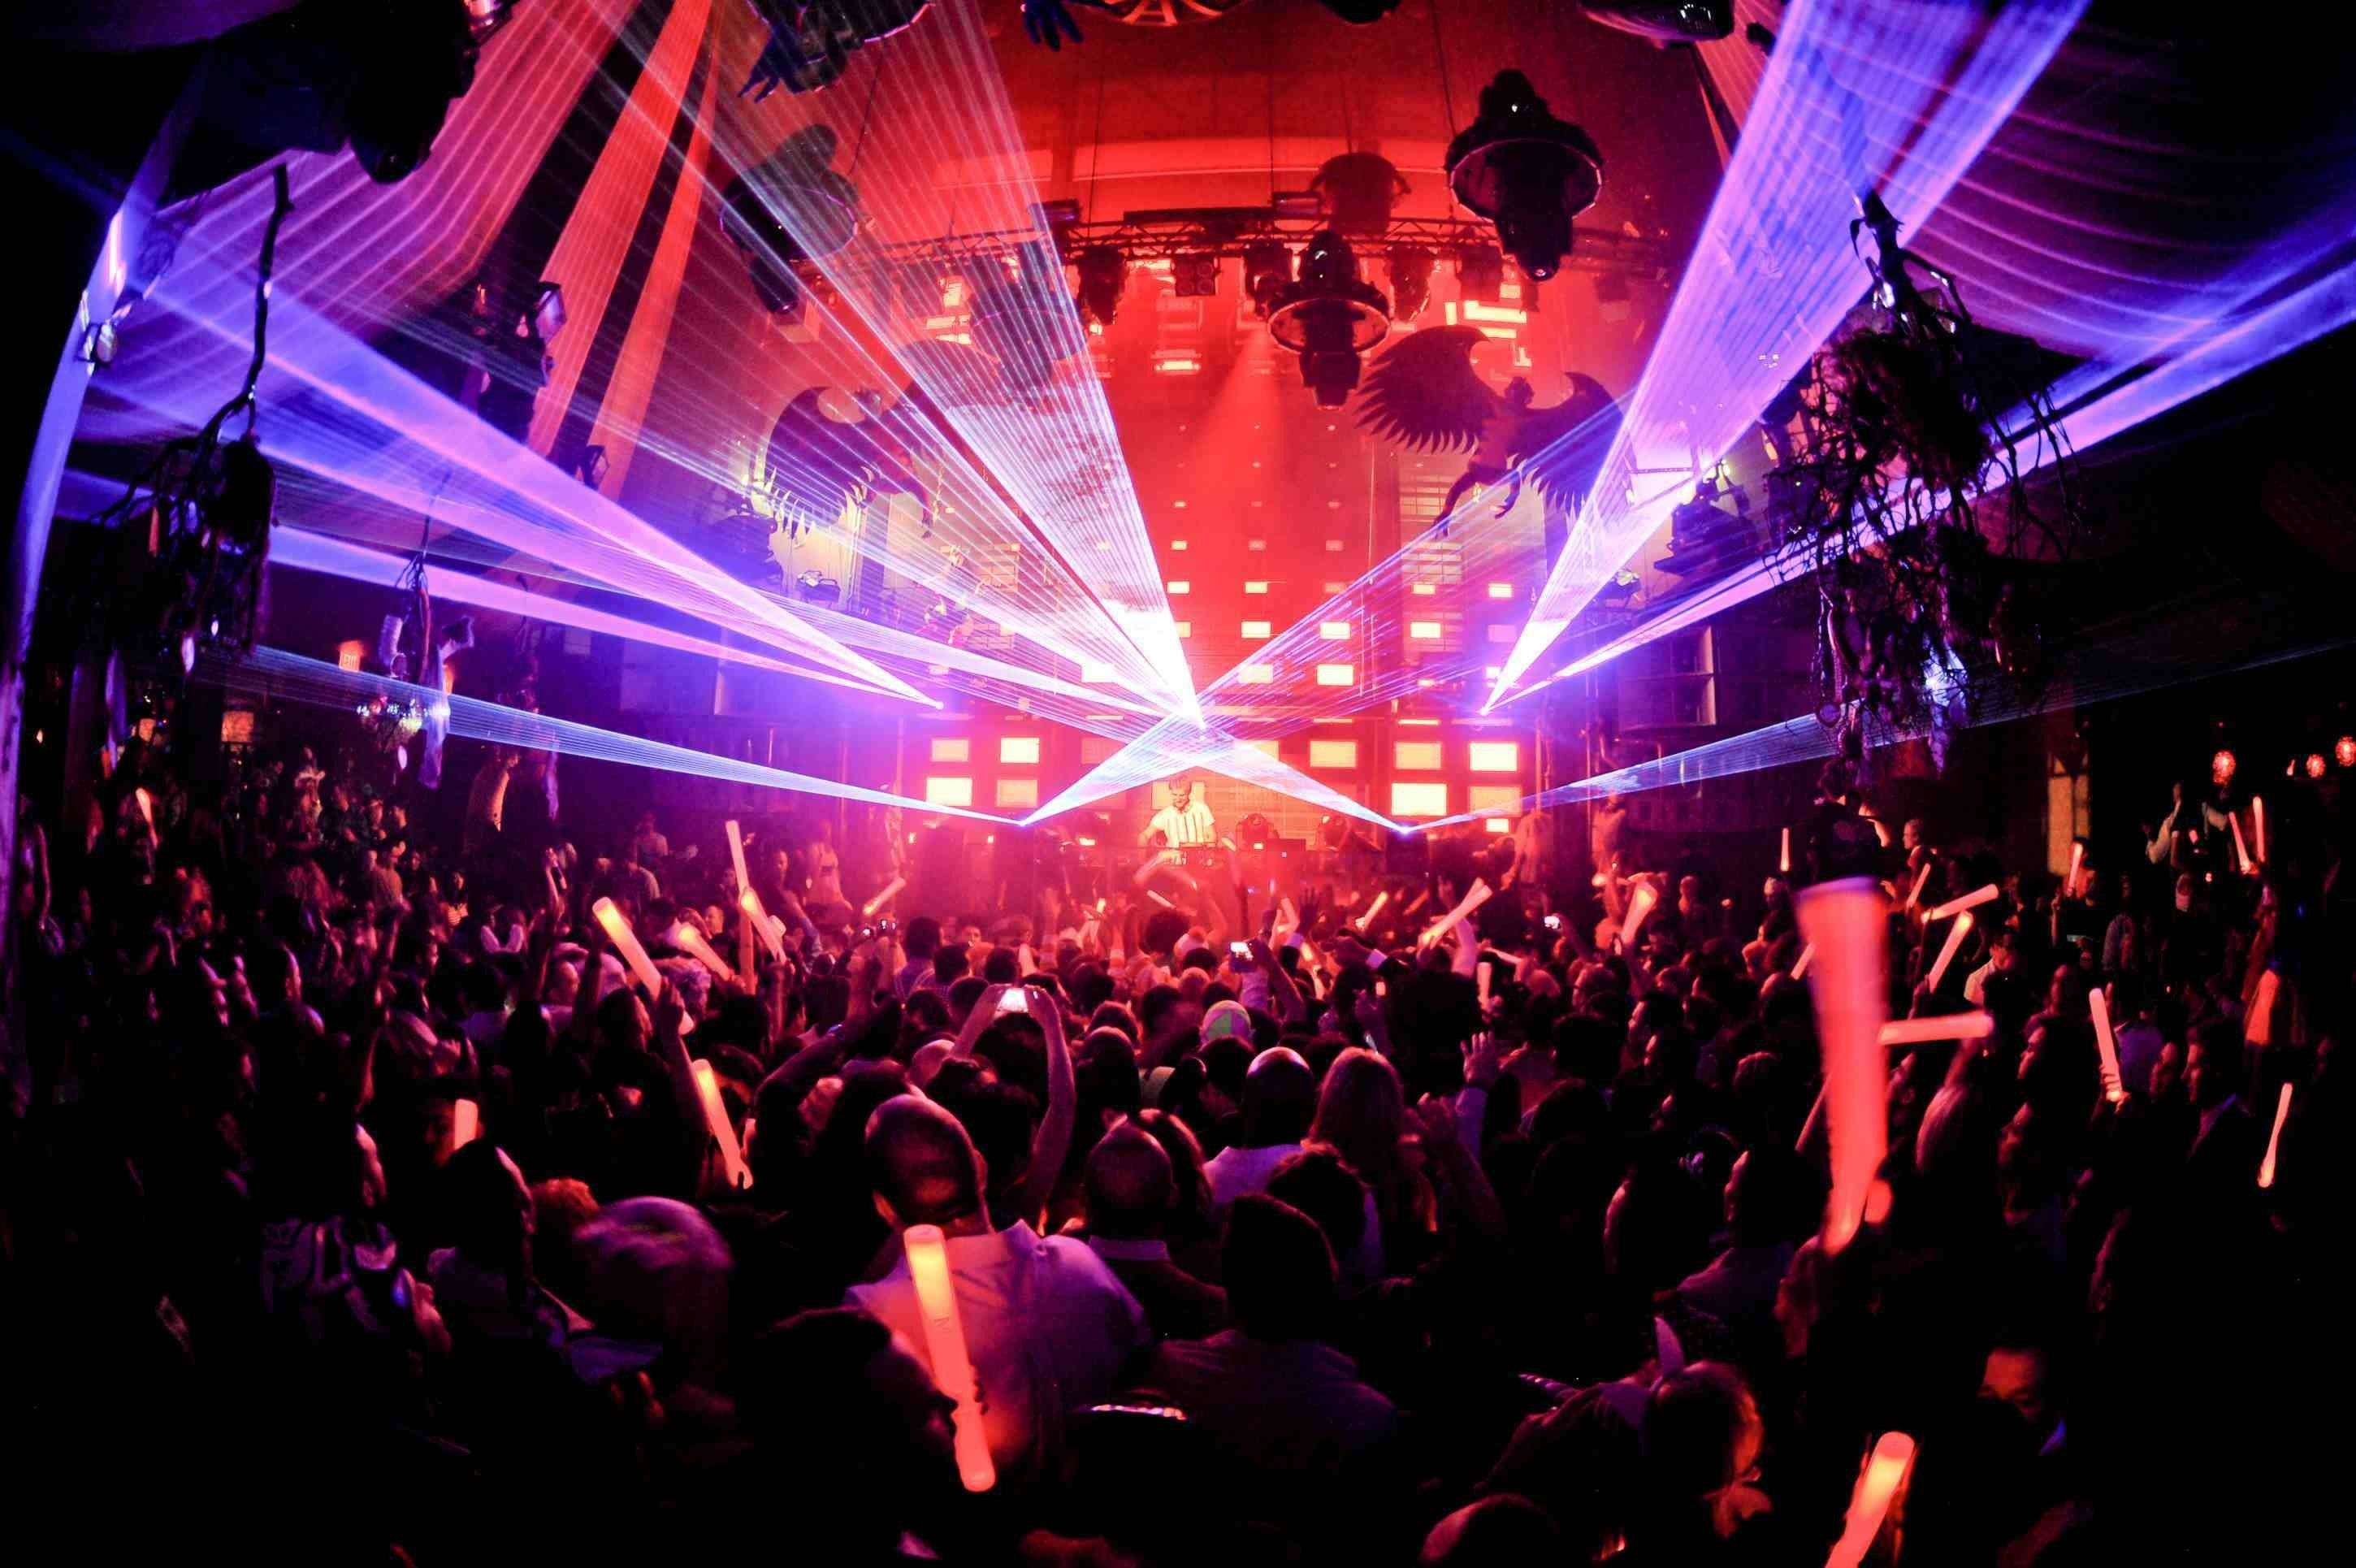 Discotheque: Nightclub, Club atmosphere, An entertainment venue during nighttime, Dance floor. 2900x1930 HD Wallpaper.